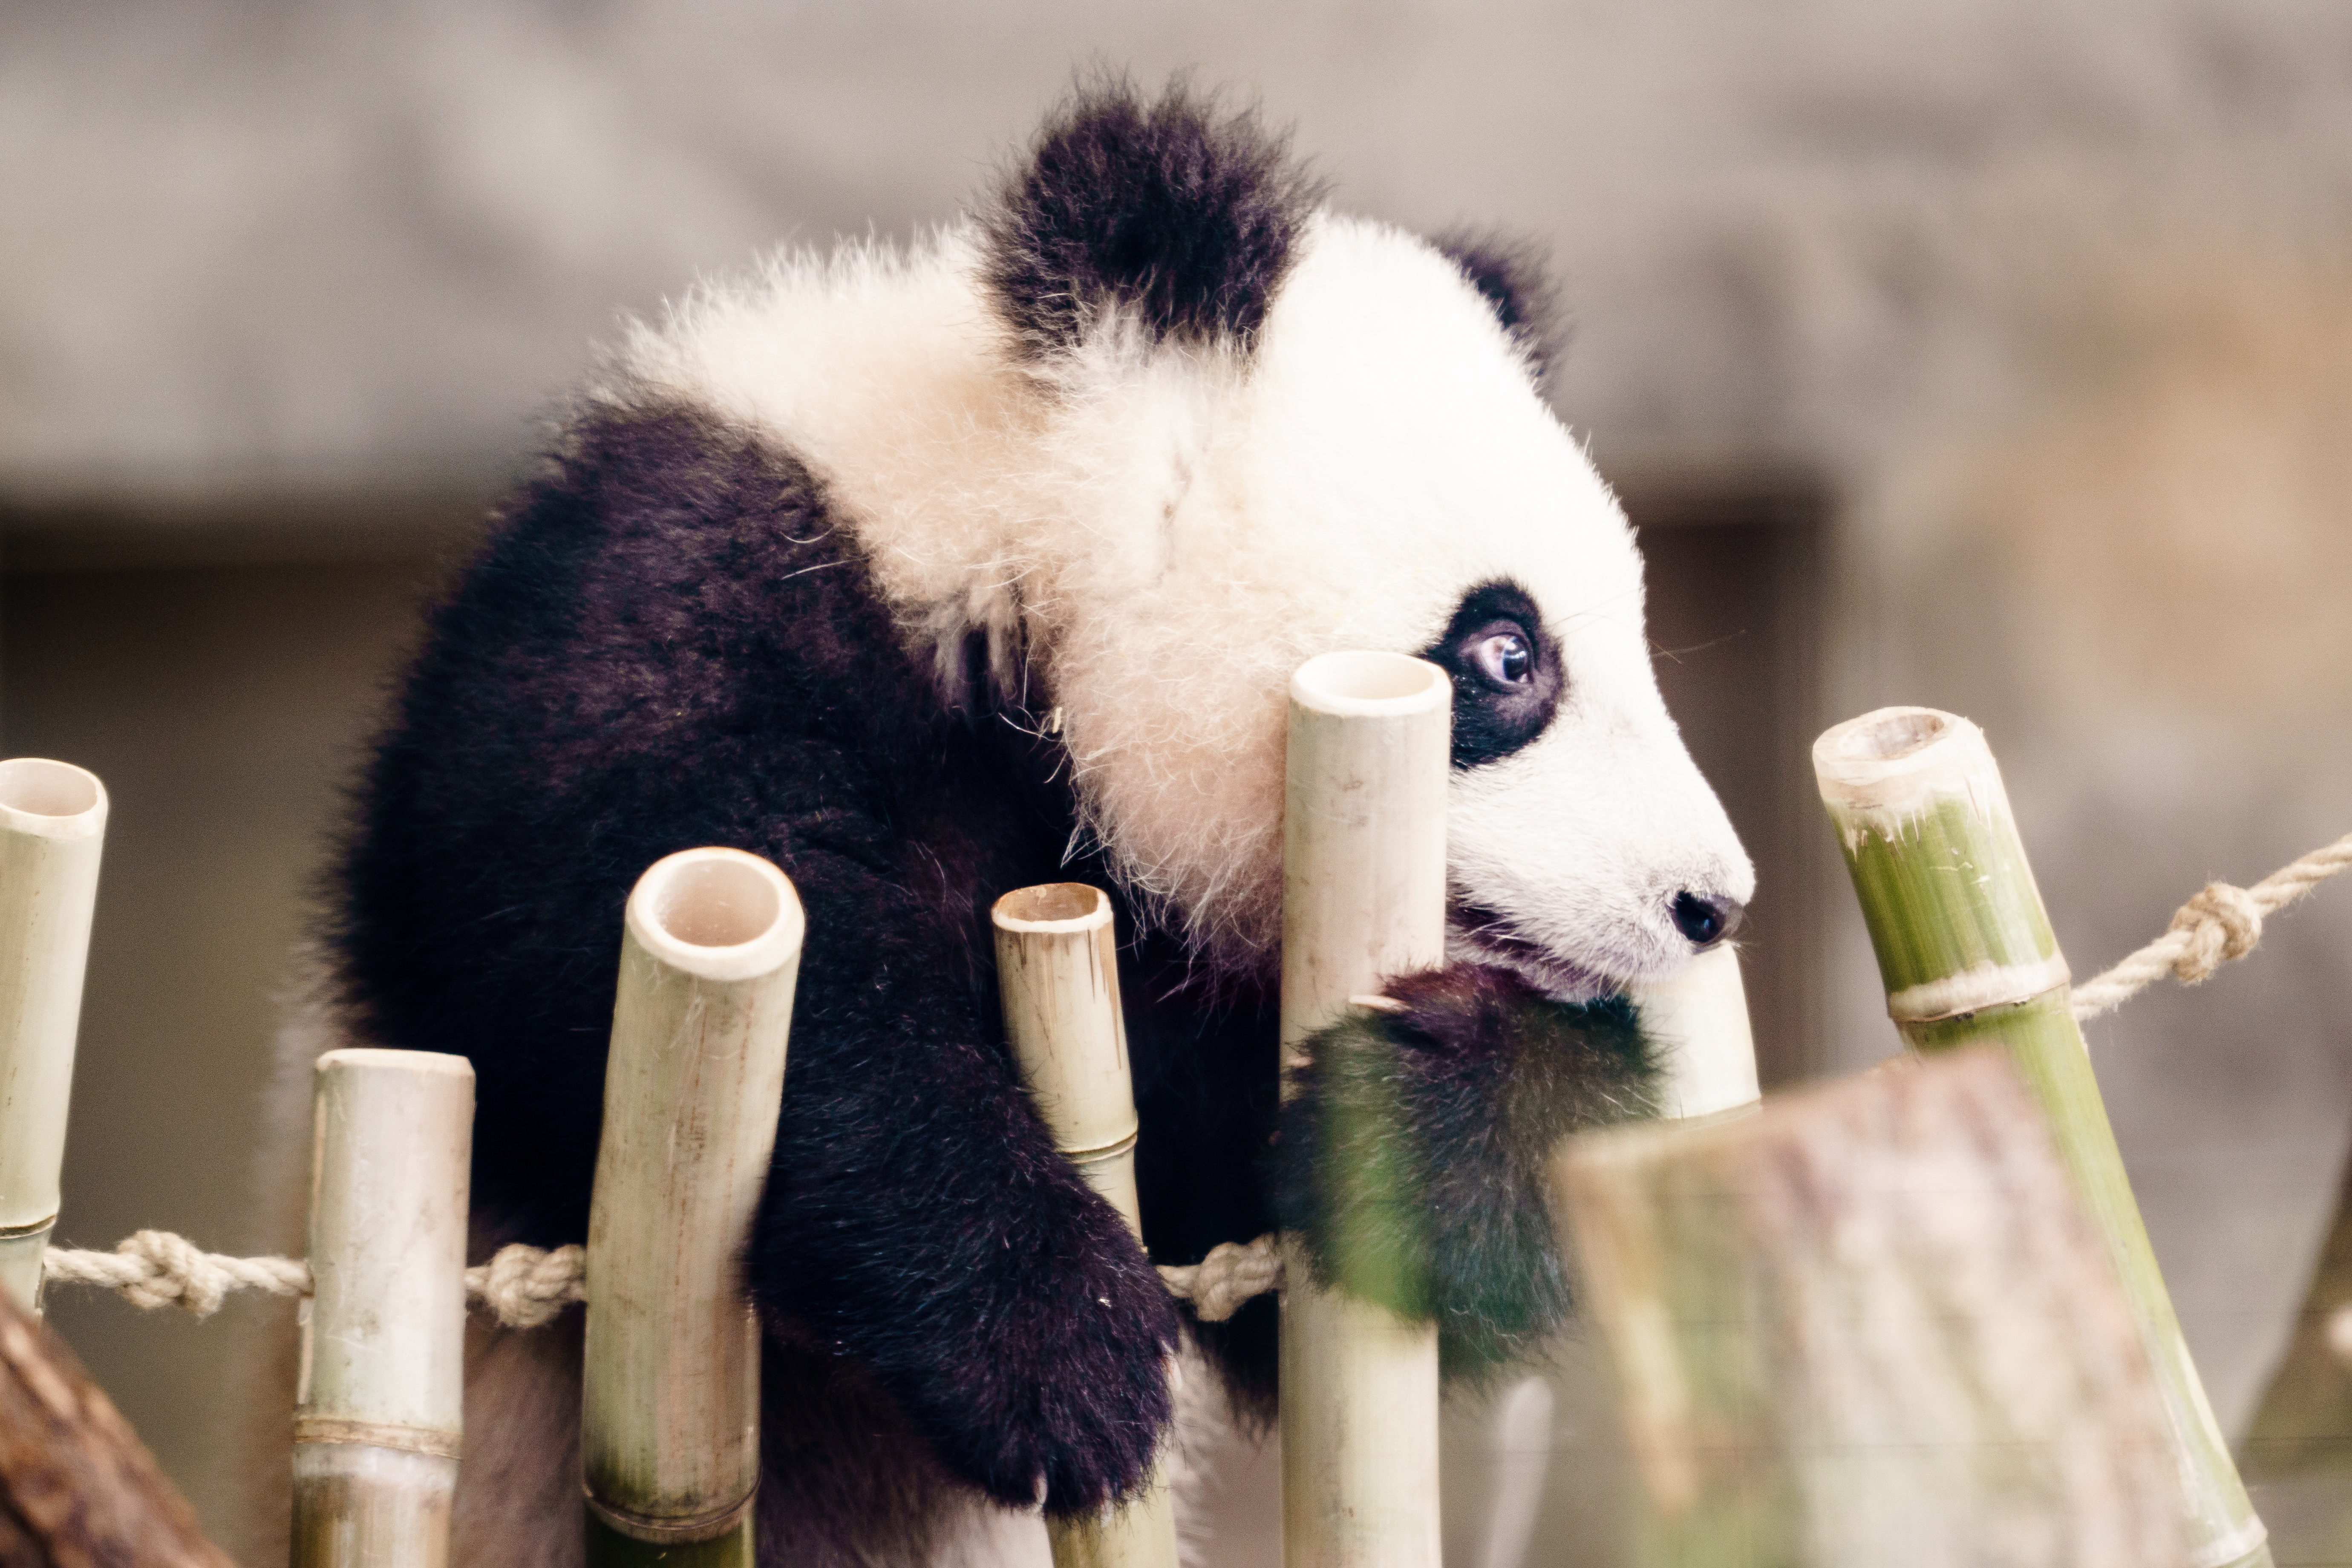 Imagen de un oso panda. EFE/EPA/CLEMENS BILAN/Archivo
